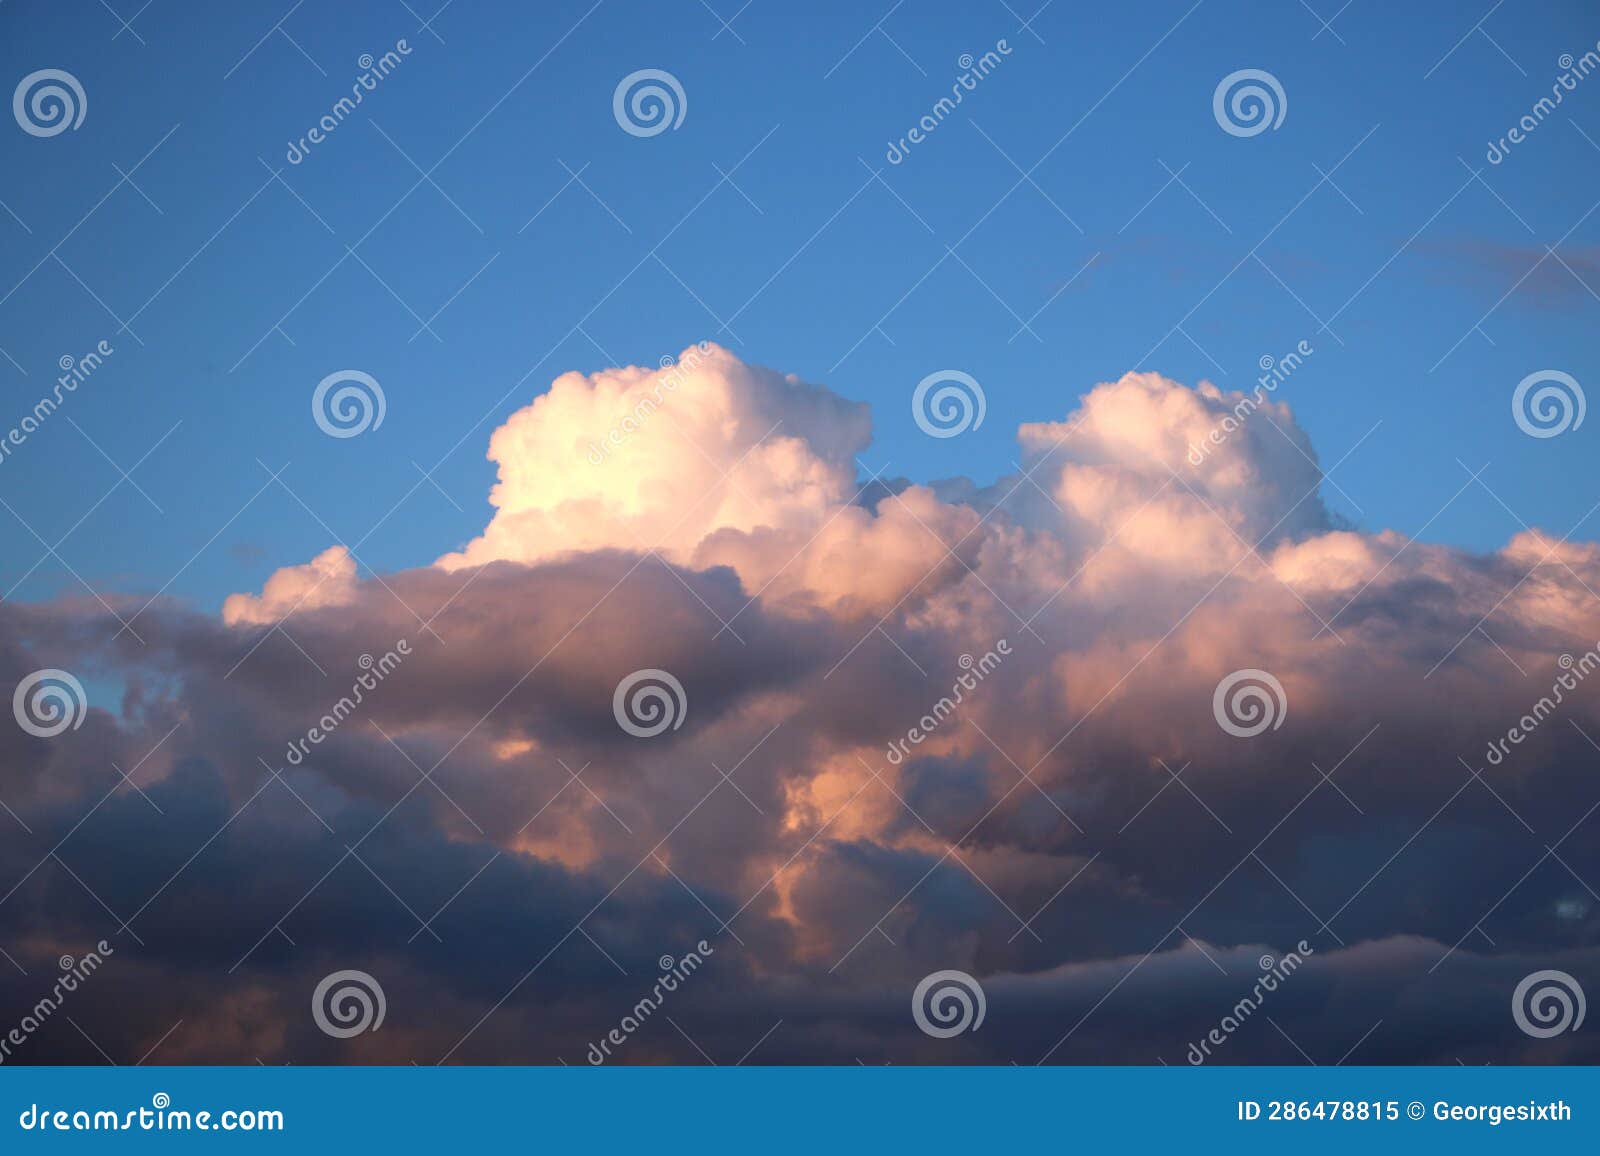 cumulo-nimbus clouds pink at sunset and blue sky